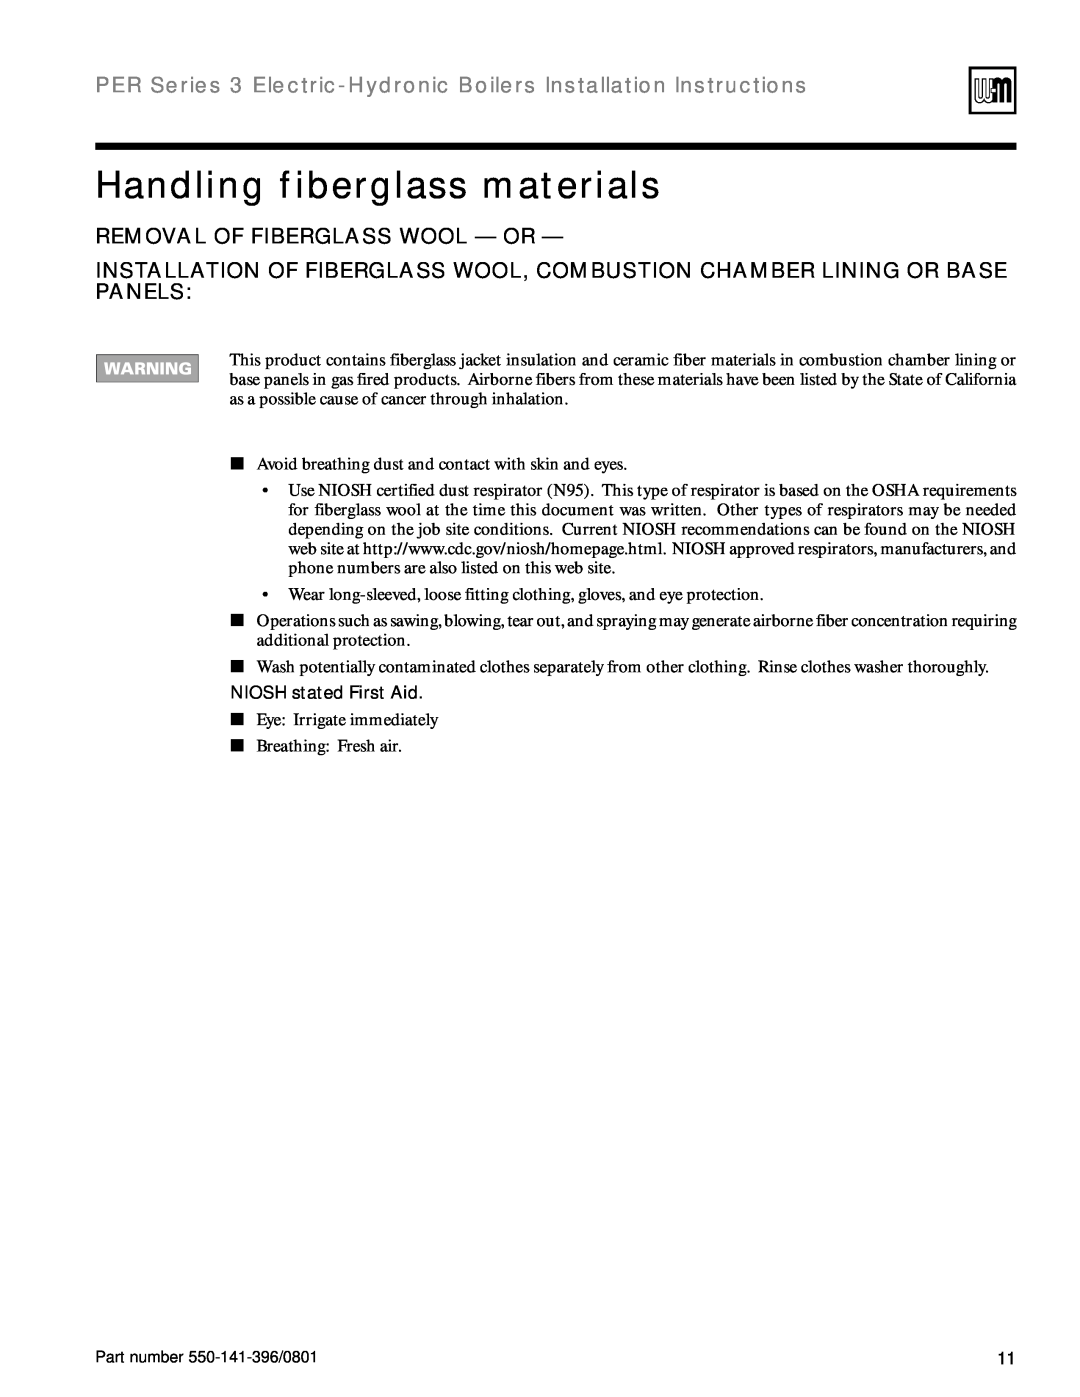 Weil-McLain 550-141-396/0801 Handling fiberglass materials, Removal Of Fiberglass Wool - Or, NIOSH stated First Aid 